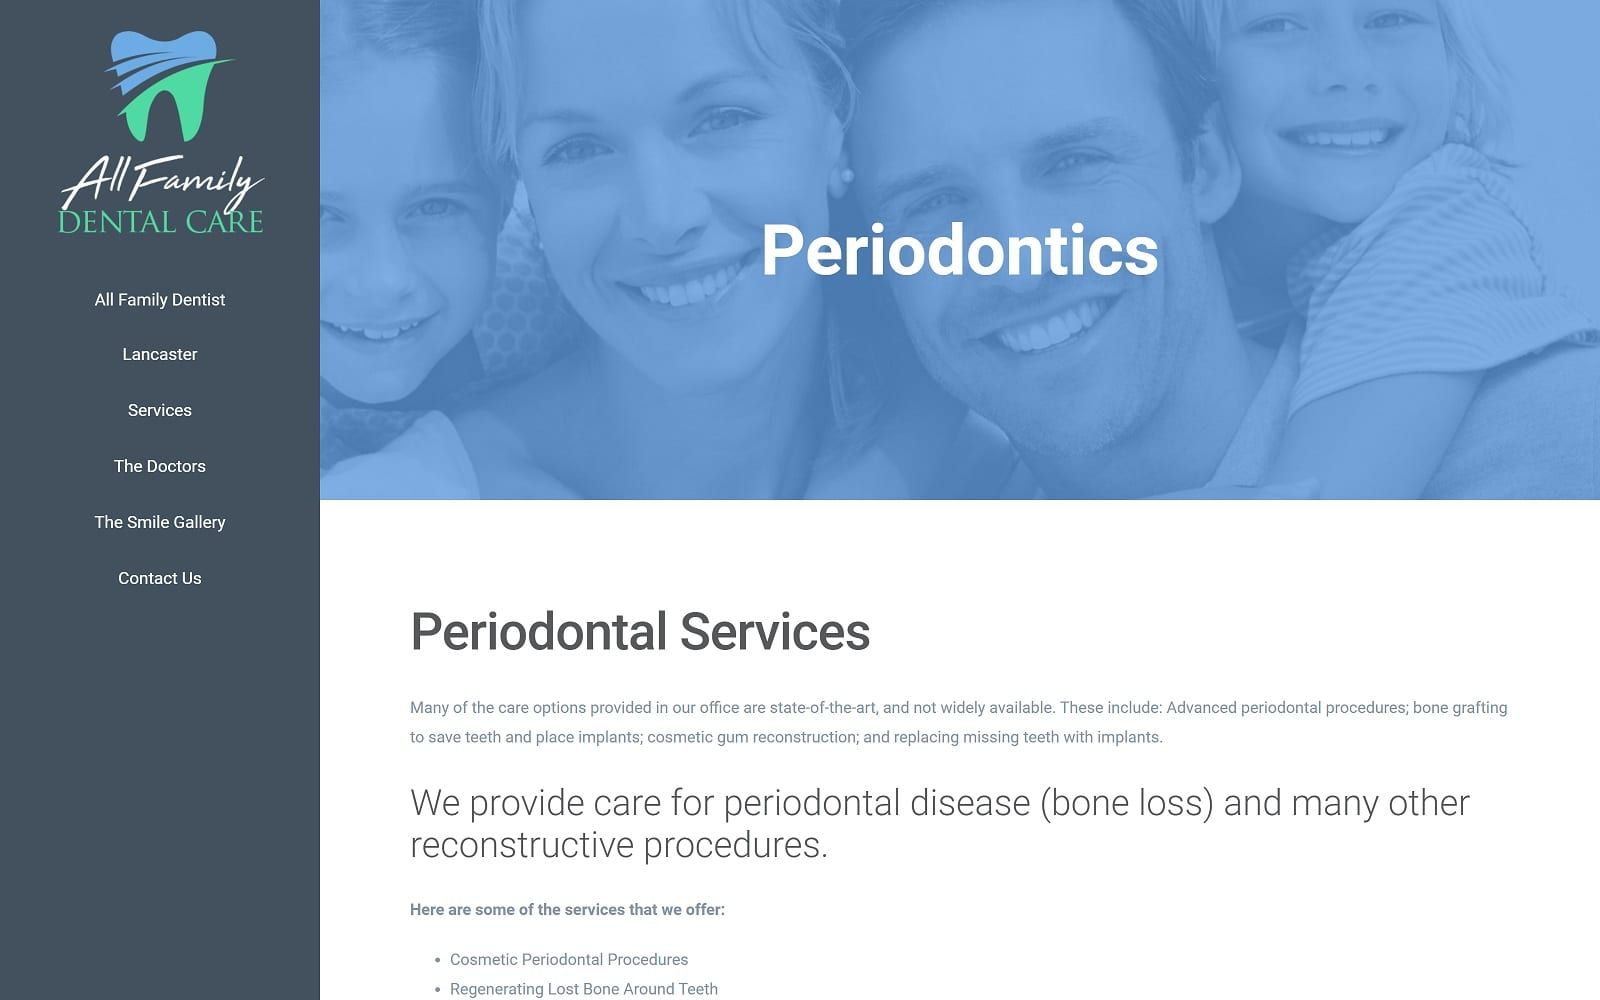 The screenshot of all family dentistry - porcelain veneers & root canals palmdale ca allfamilydentistlancaster. Com website